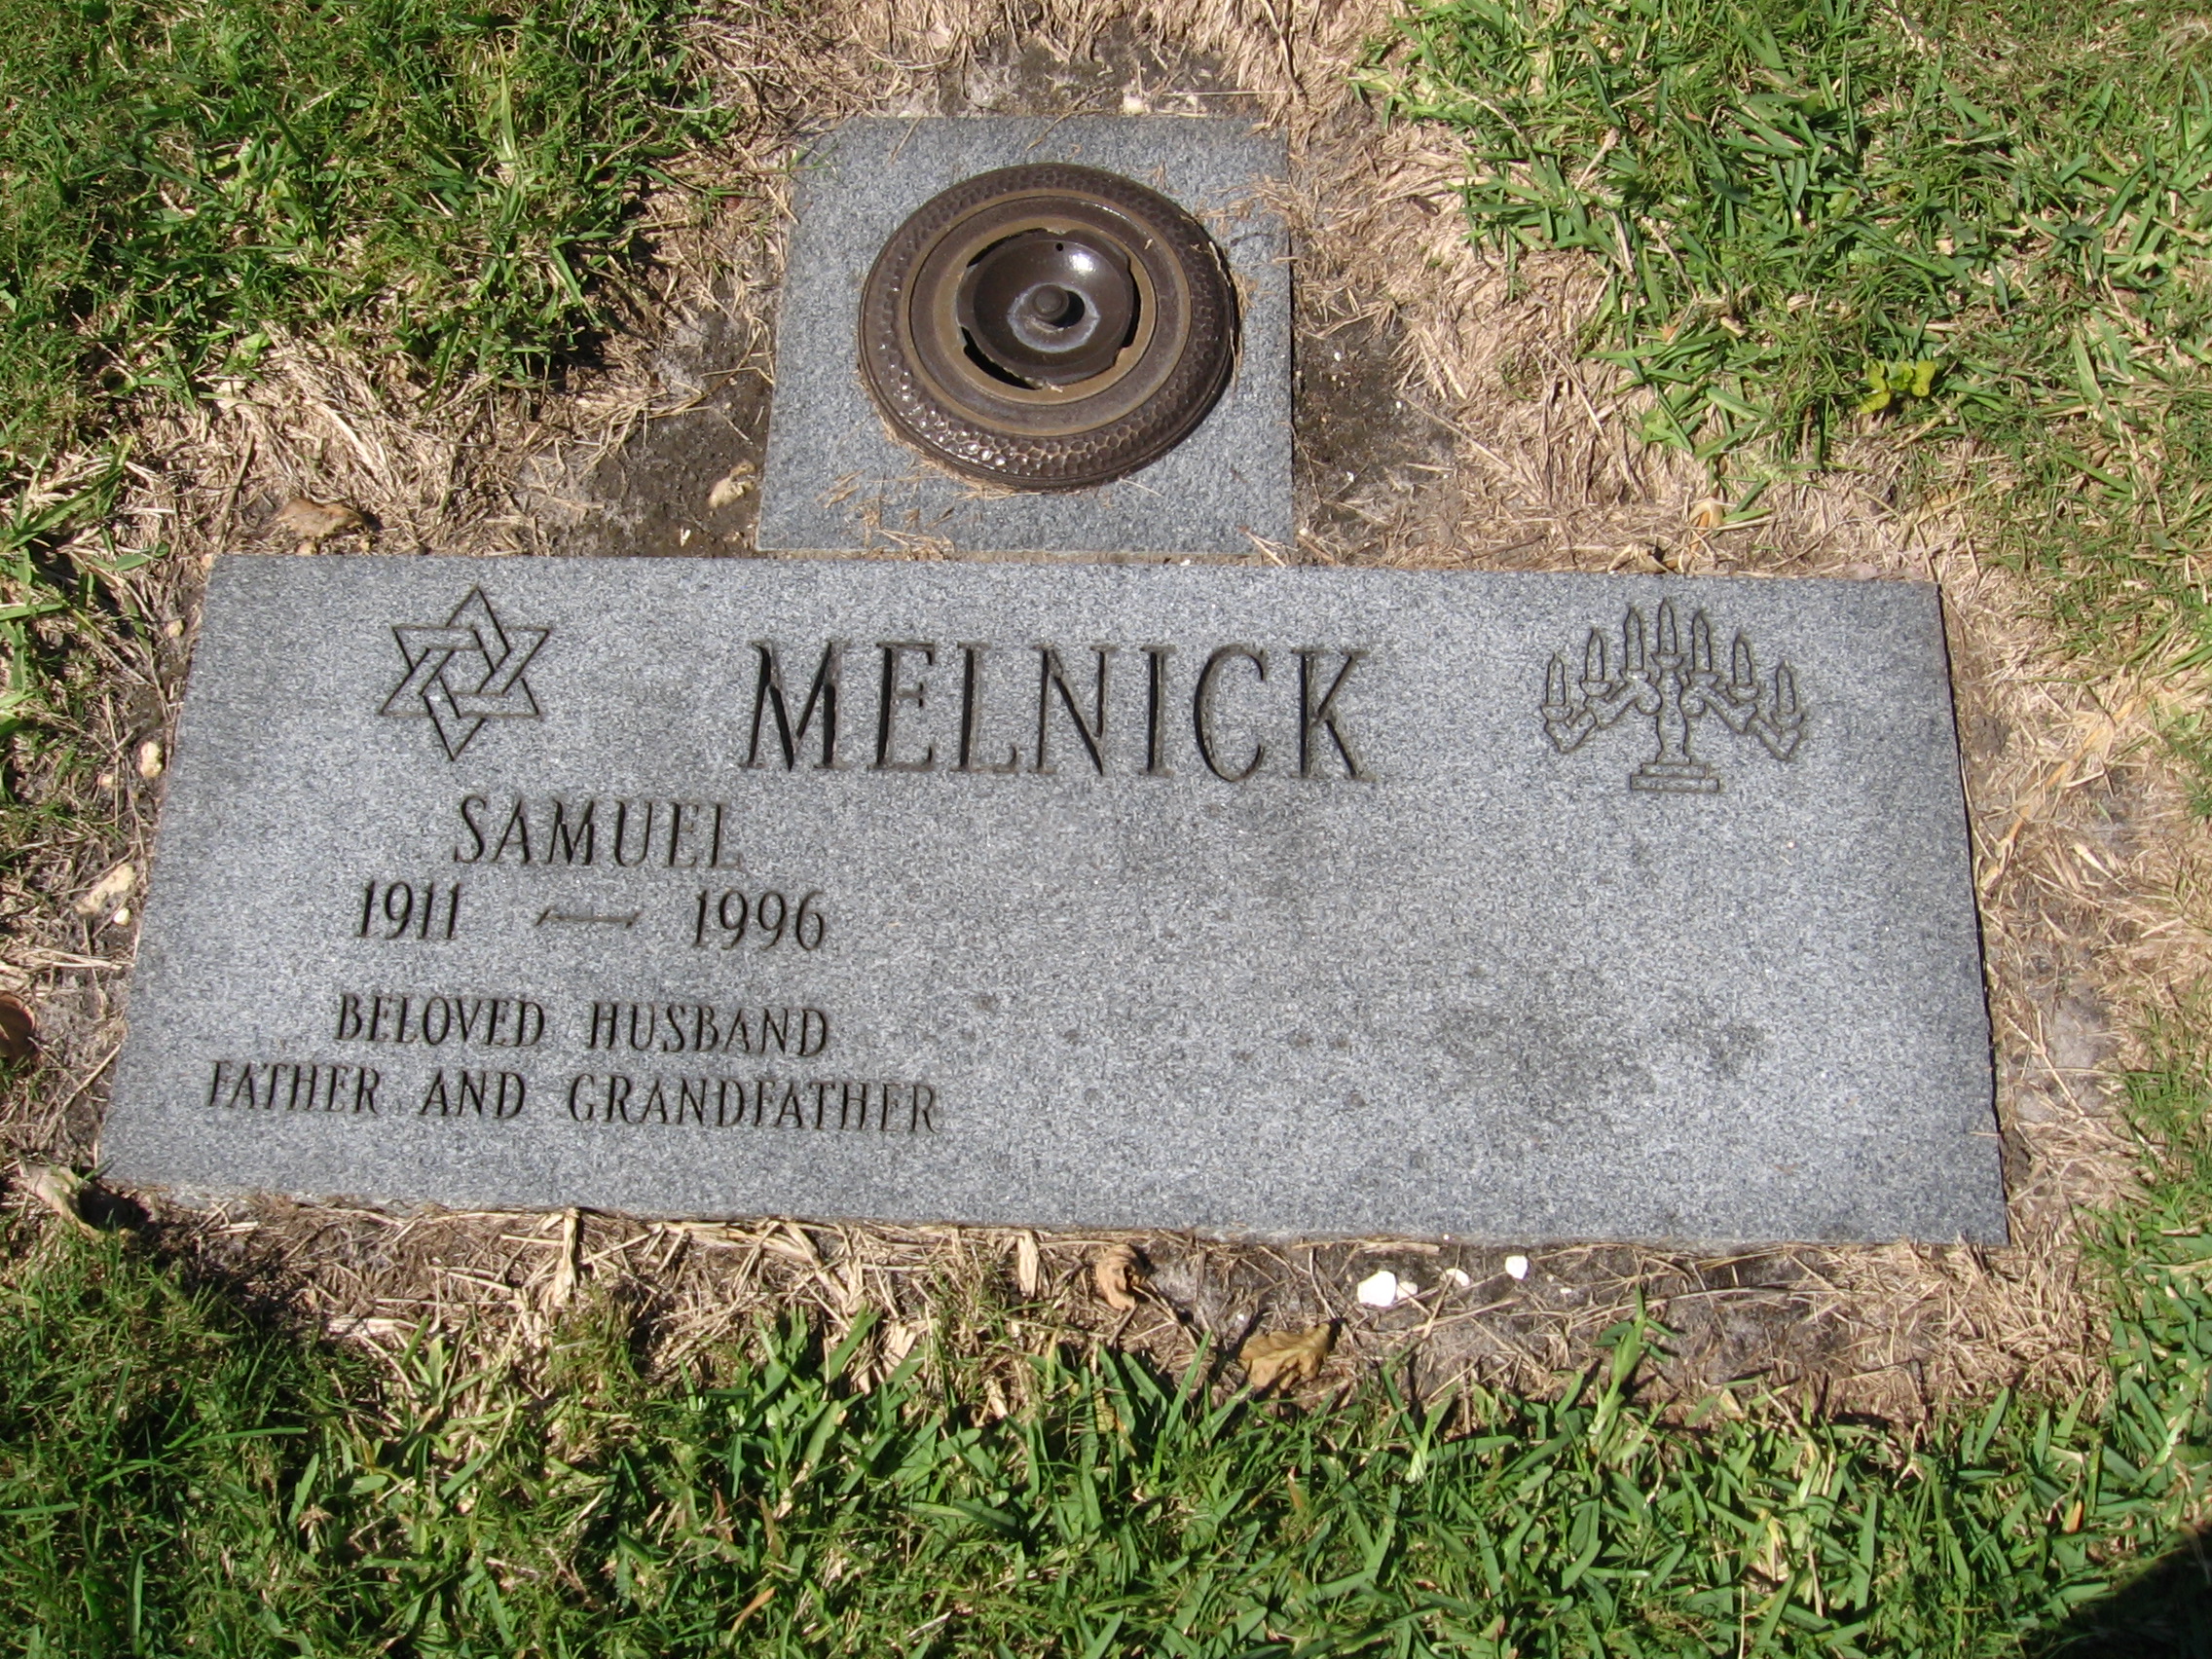 Samuel Melnick